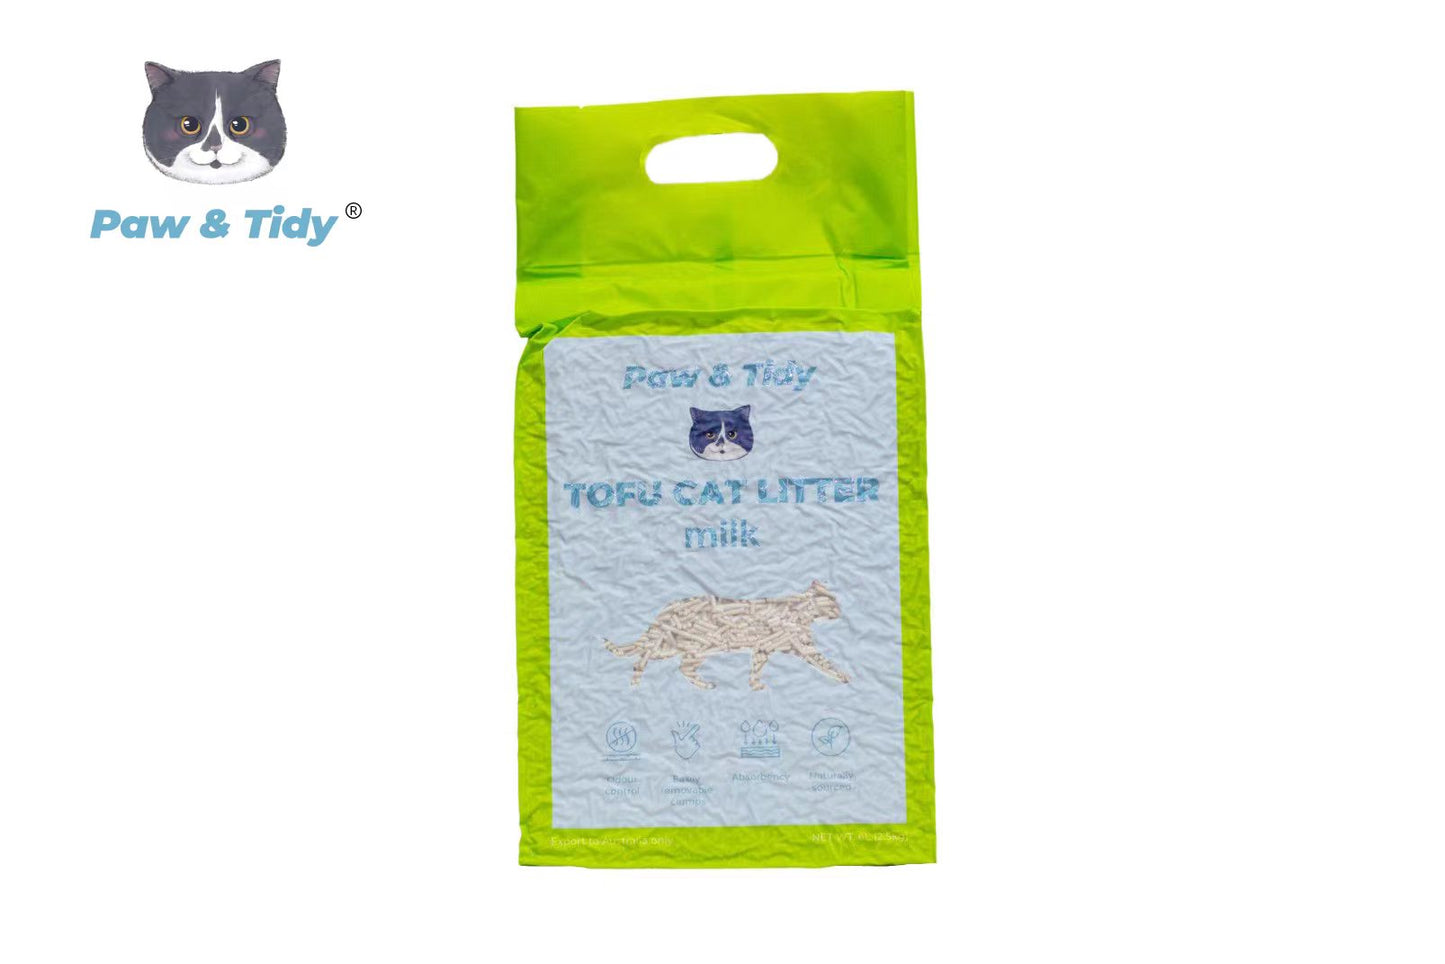 Paw&Tidy Tofu Cat Litter